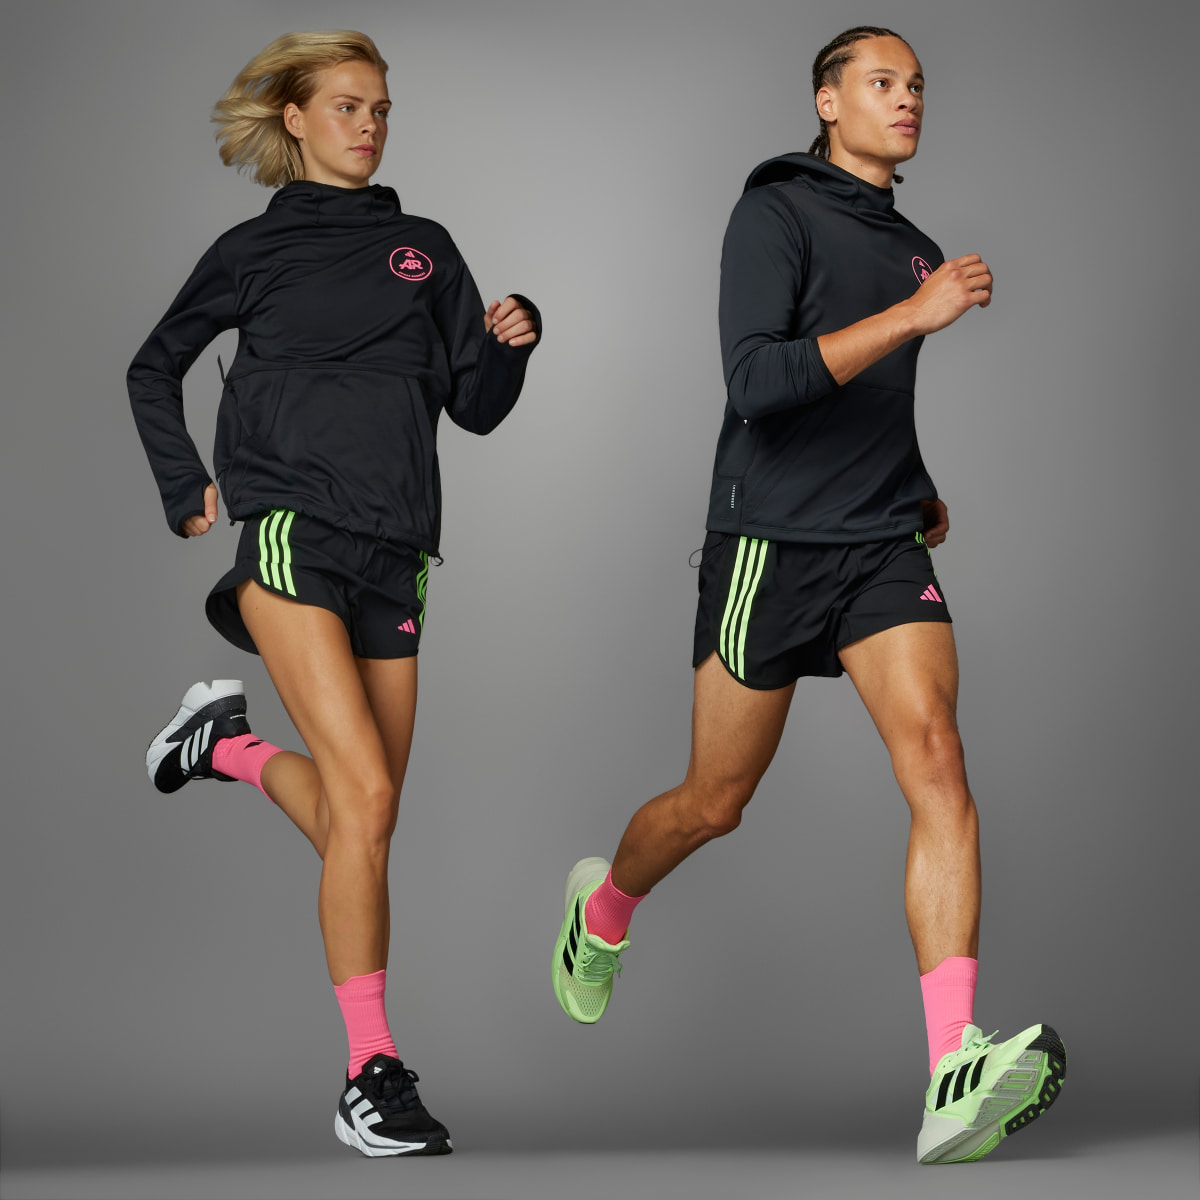 Adidas Sudadera con capucha Own the Run adidas Runners (Género neutro). 7